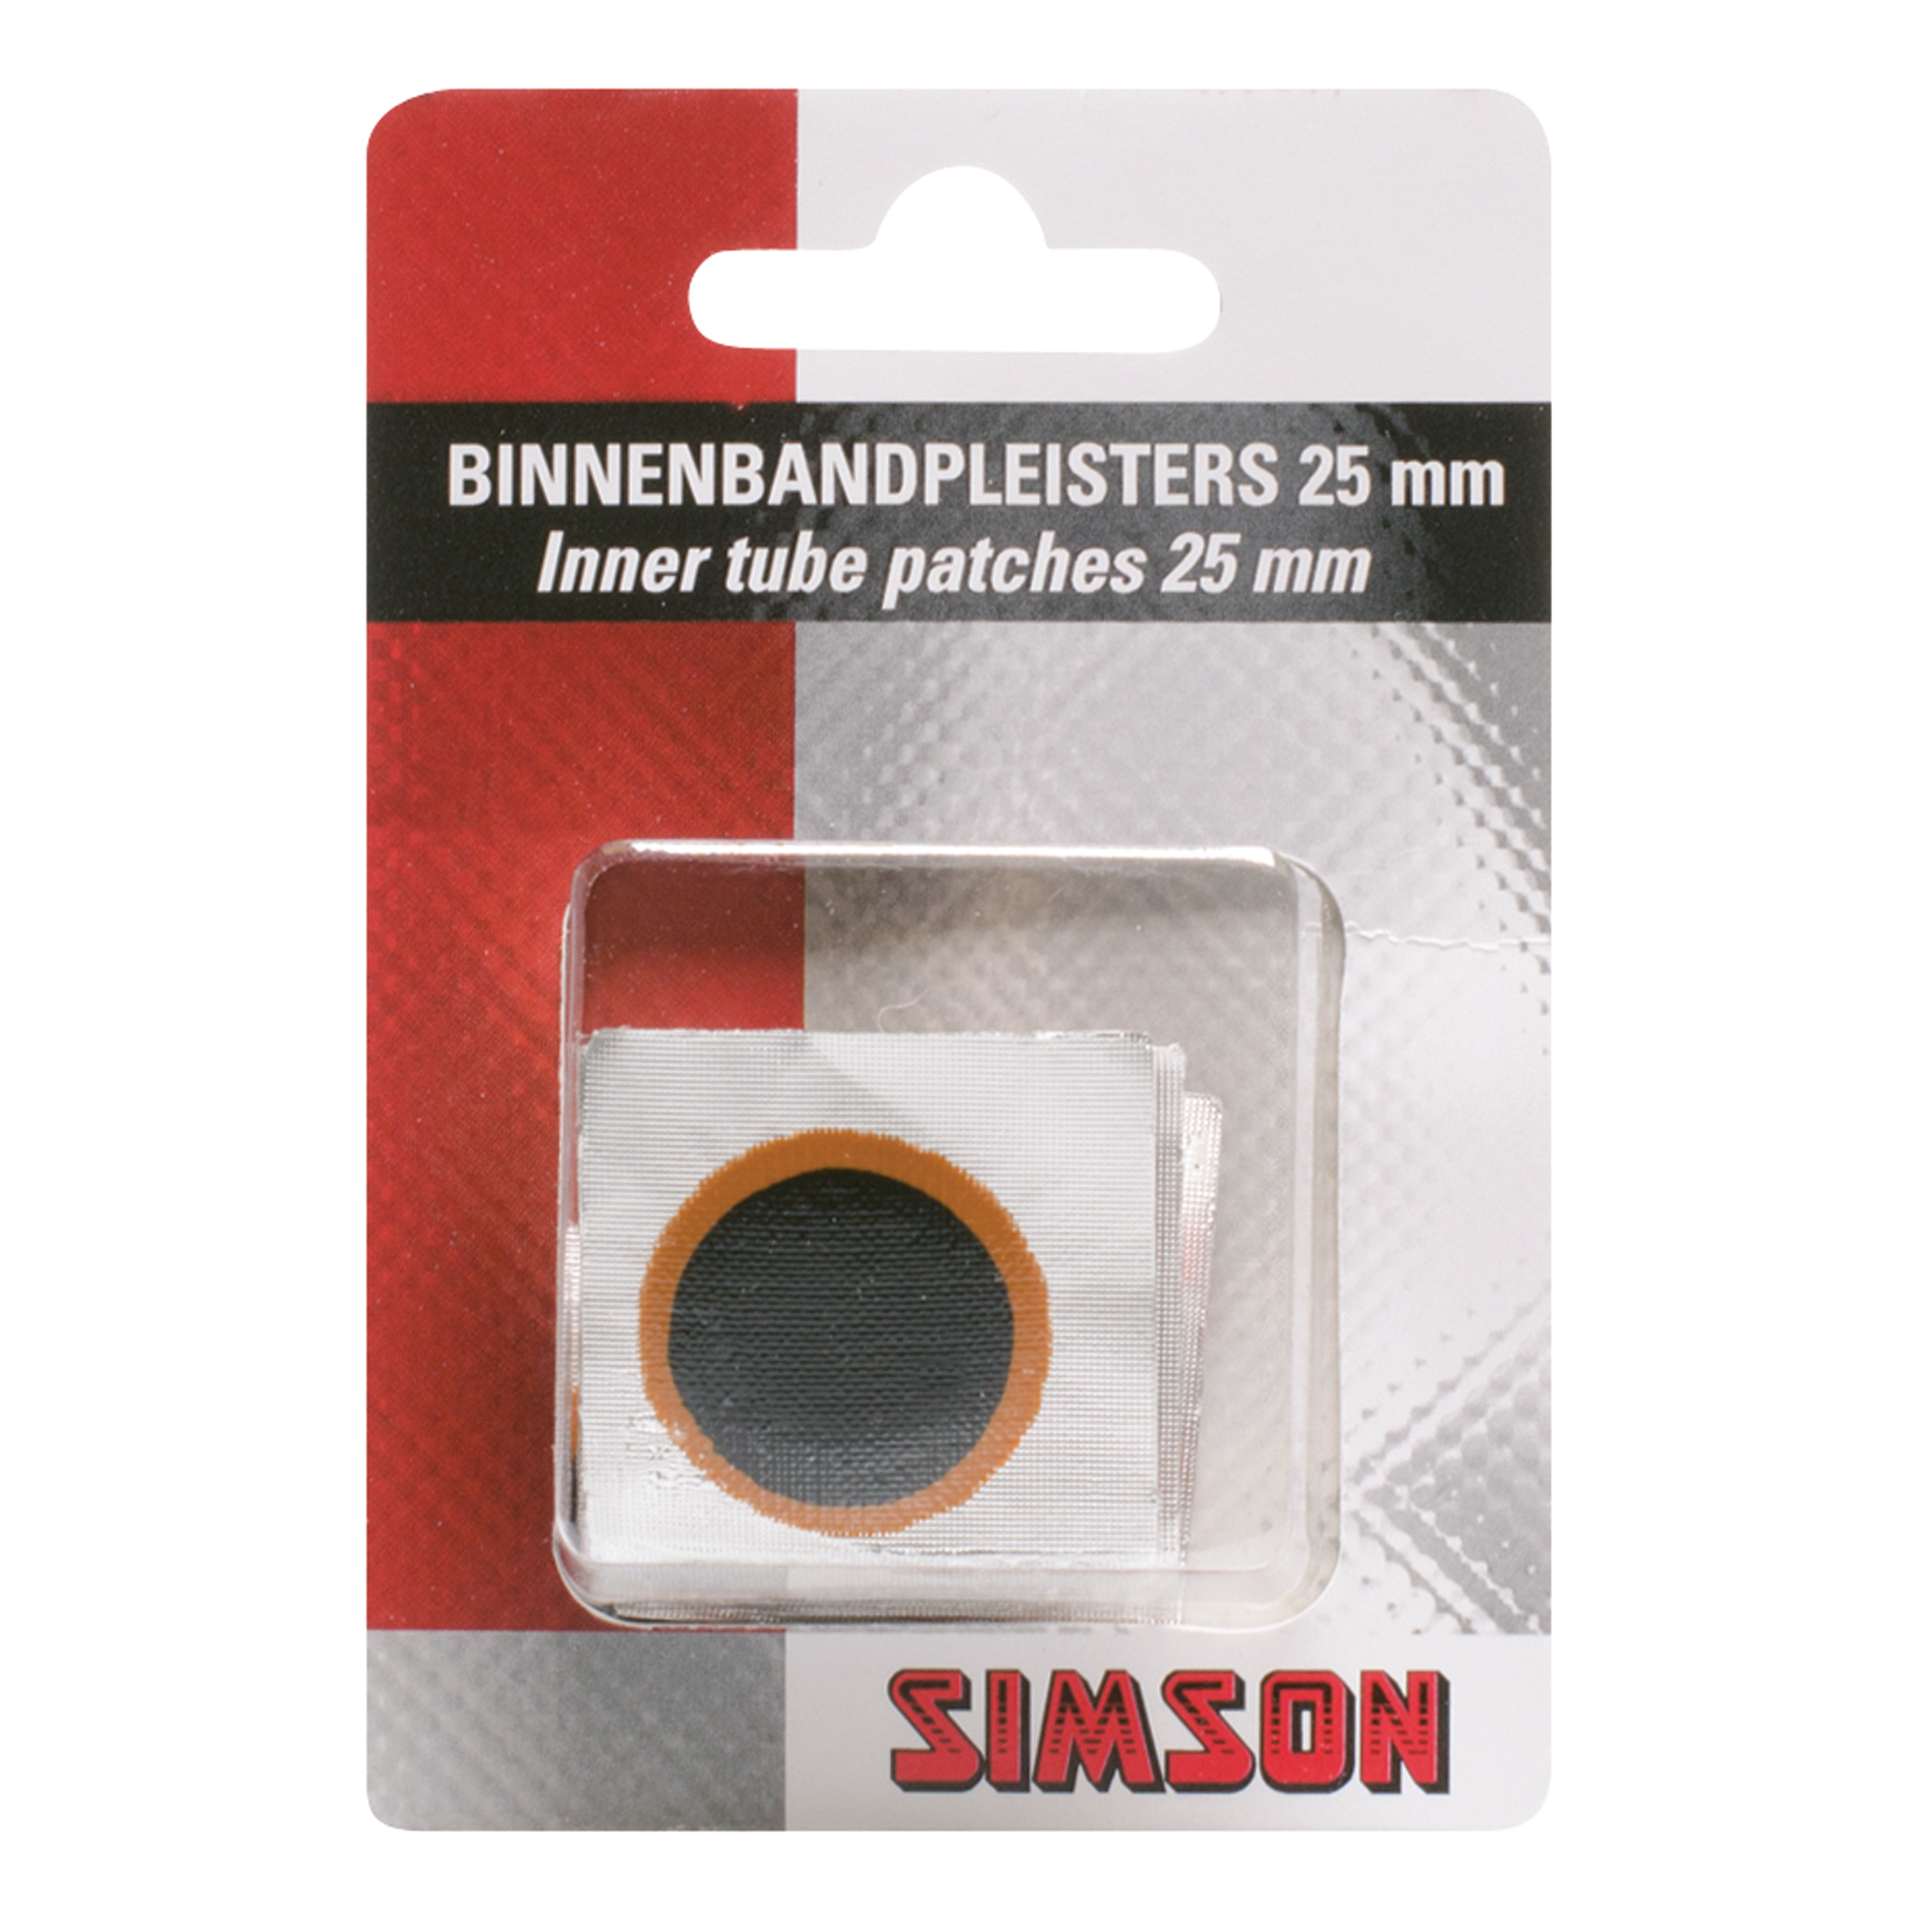 Simson Simson Binnenbandpleisters 25mm 5320521